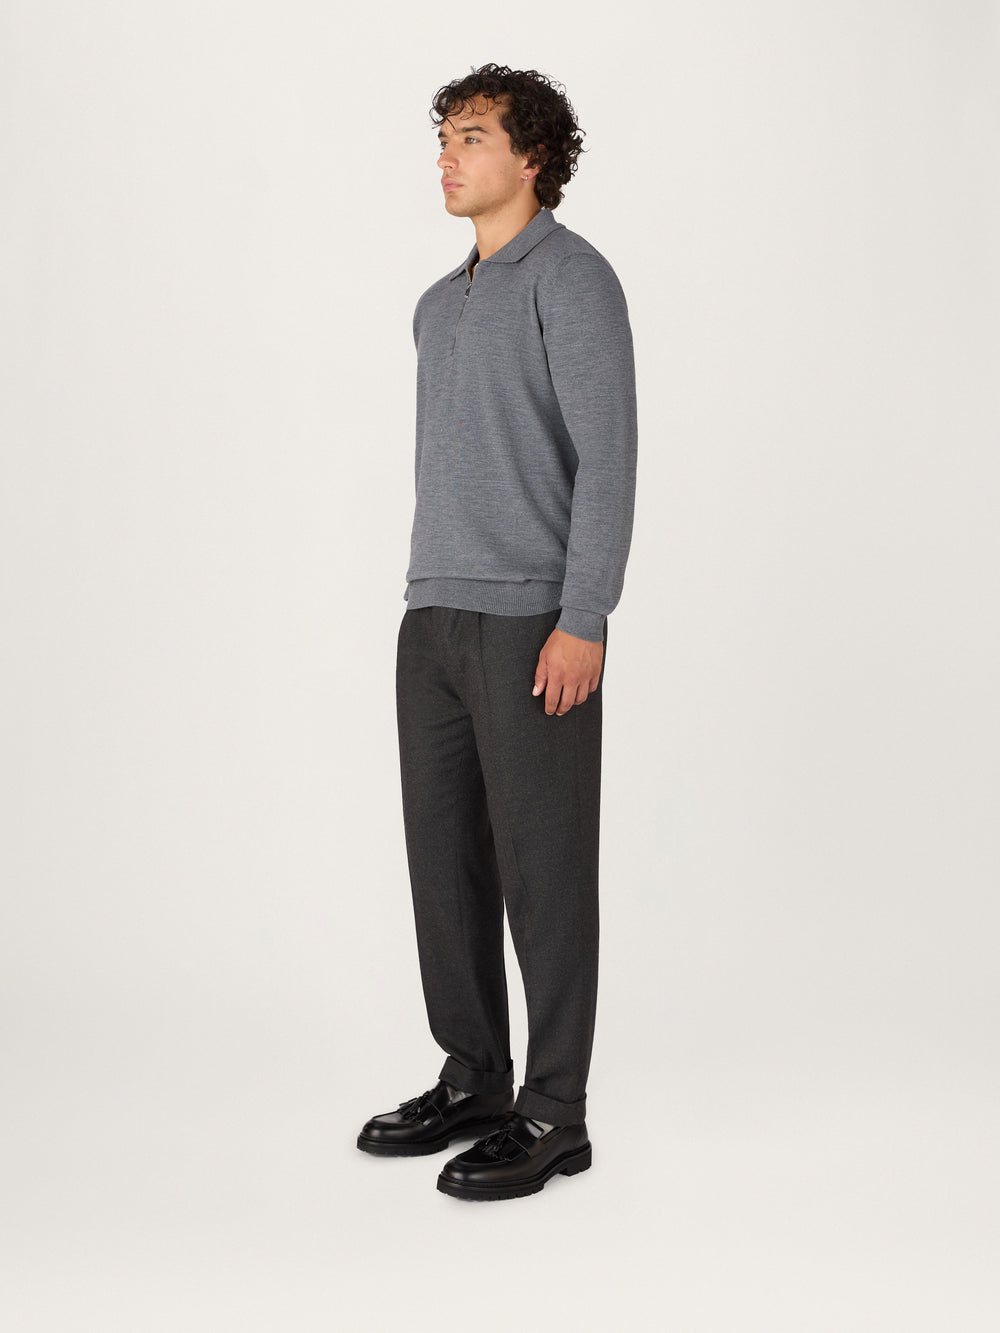 The Lightweight Easy Zip Sweater || Grey | Merino Wool